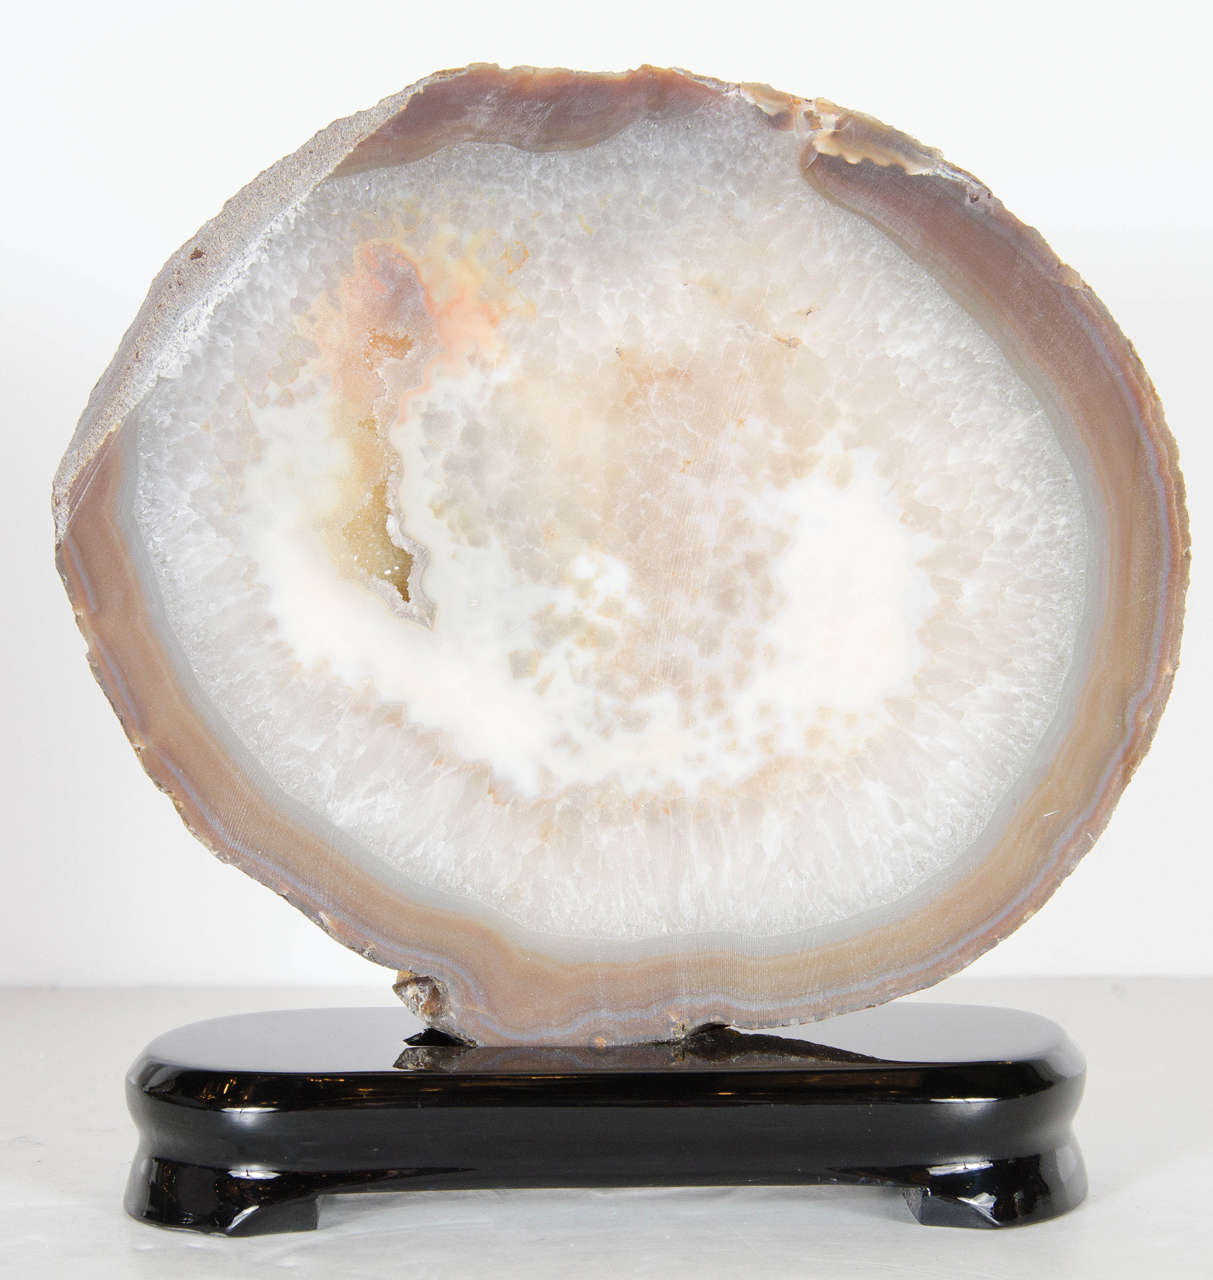 Sensational Organic Stone Geode Crystal Agate Specimen 1